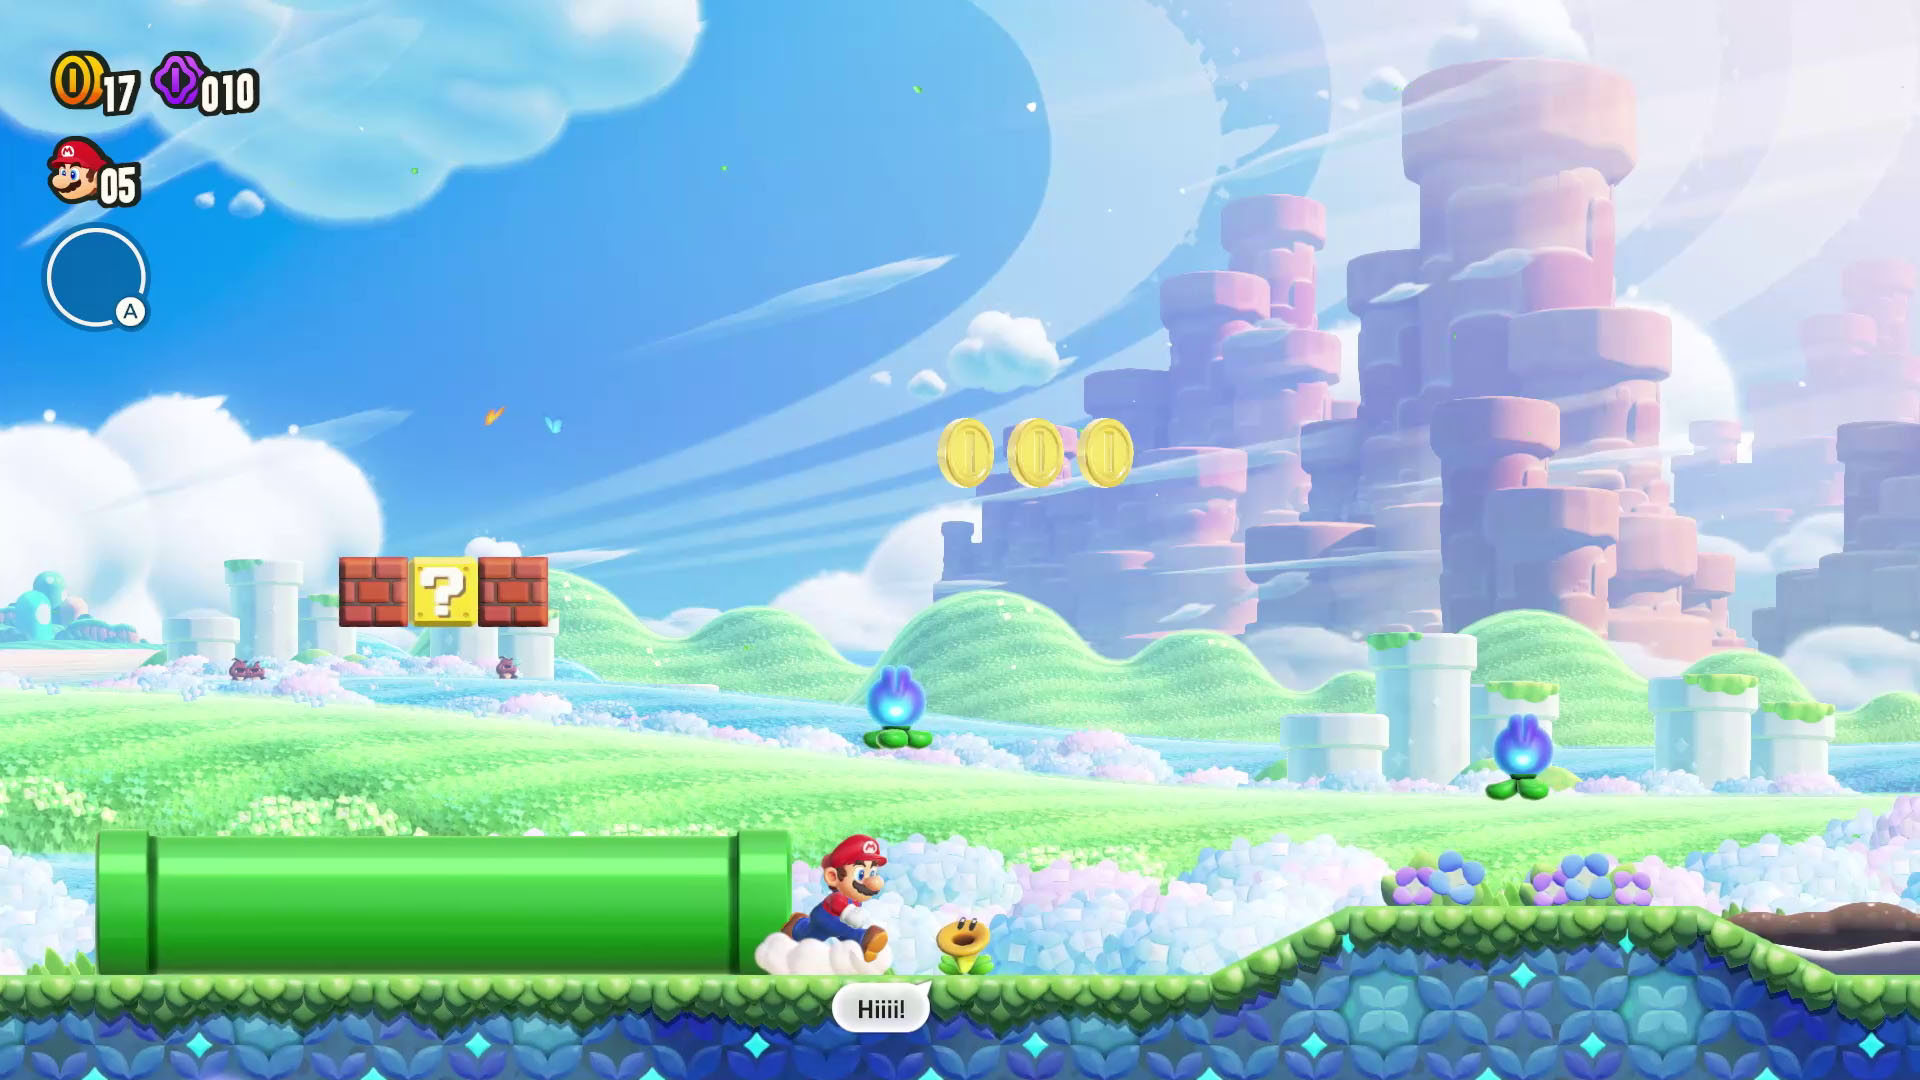 Mario talking with a talking flower in Super Mario Bros.  Wonder